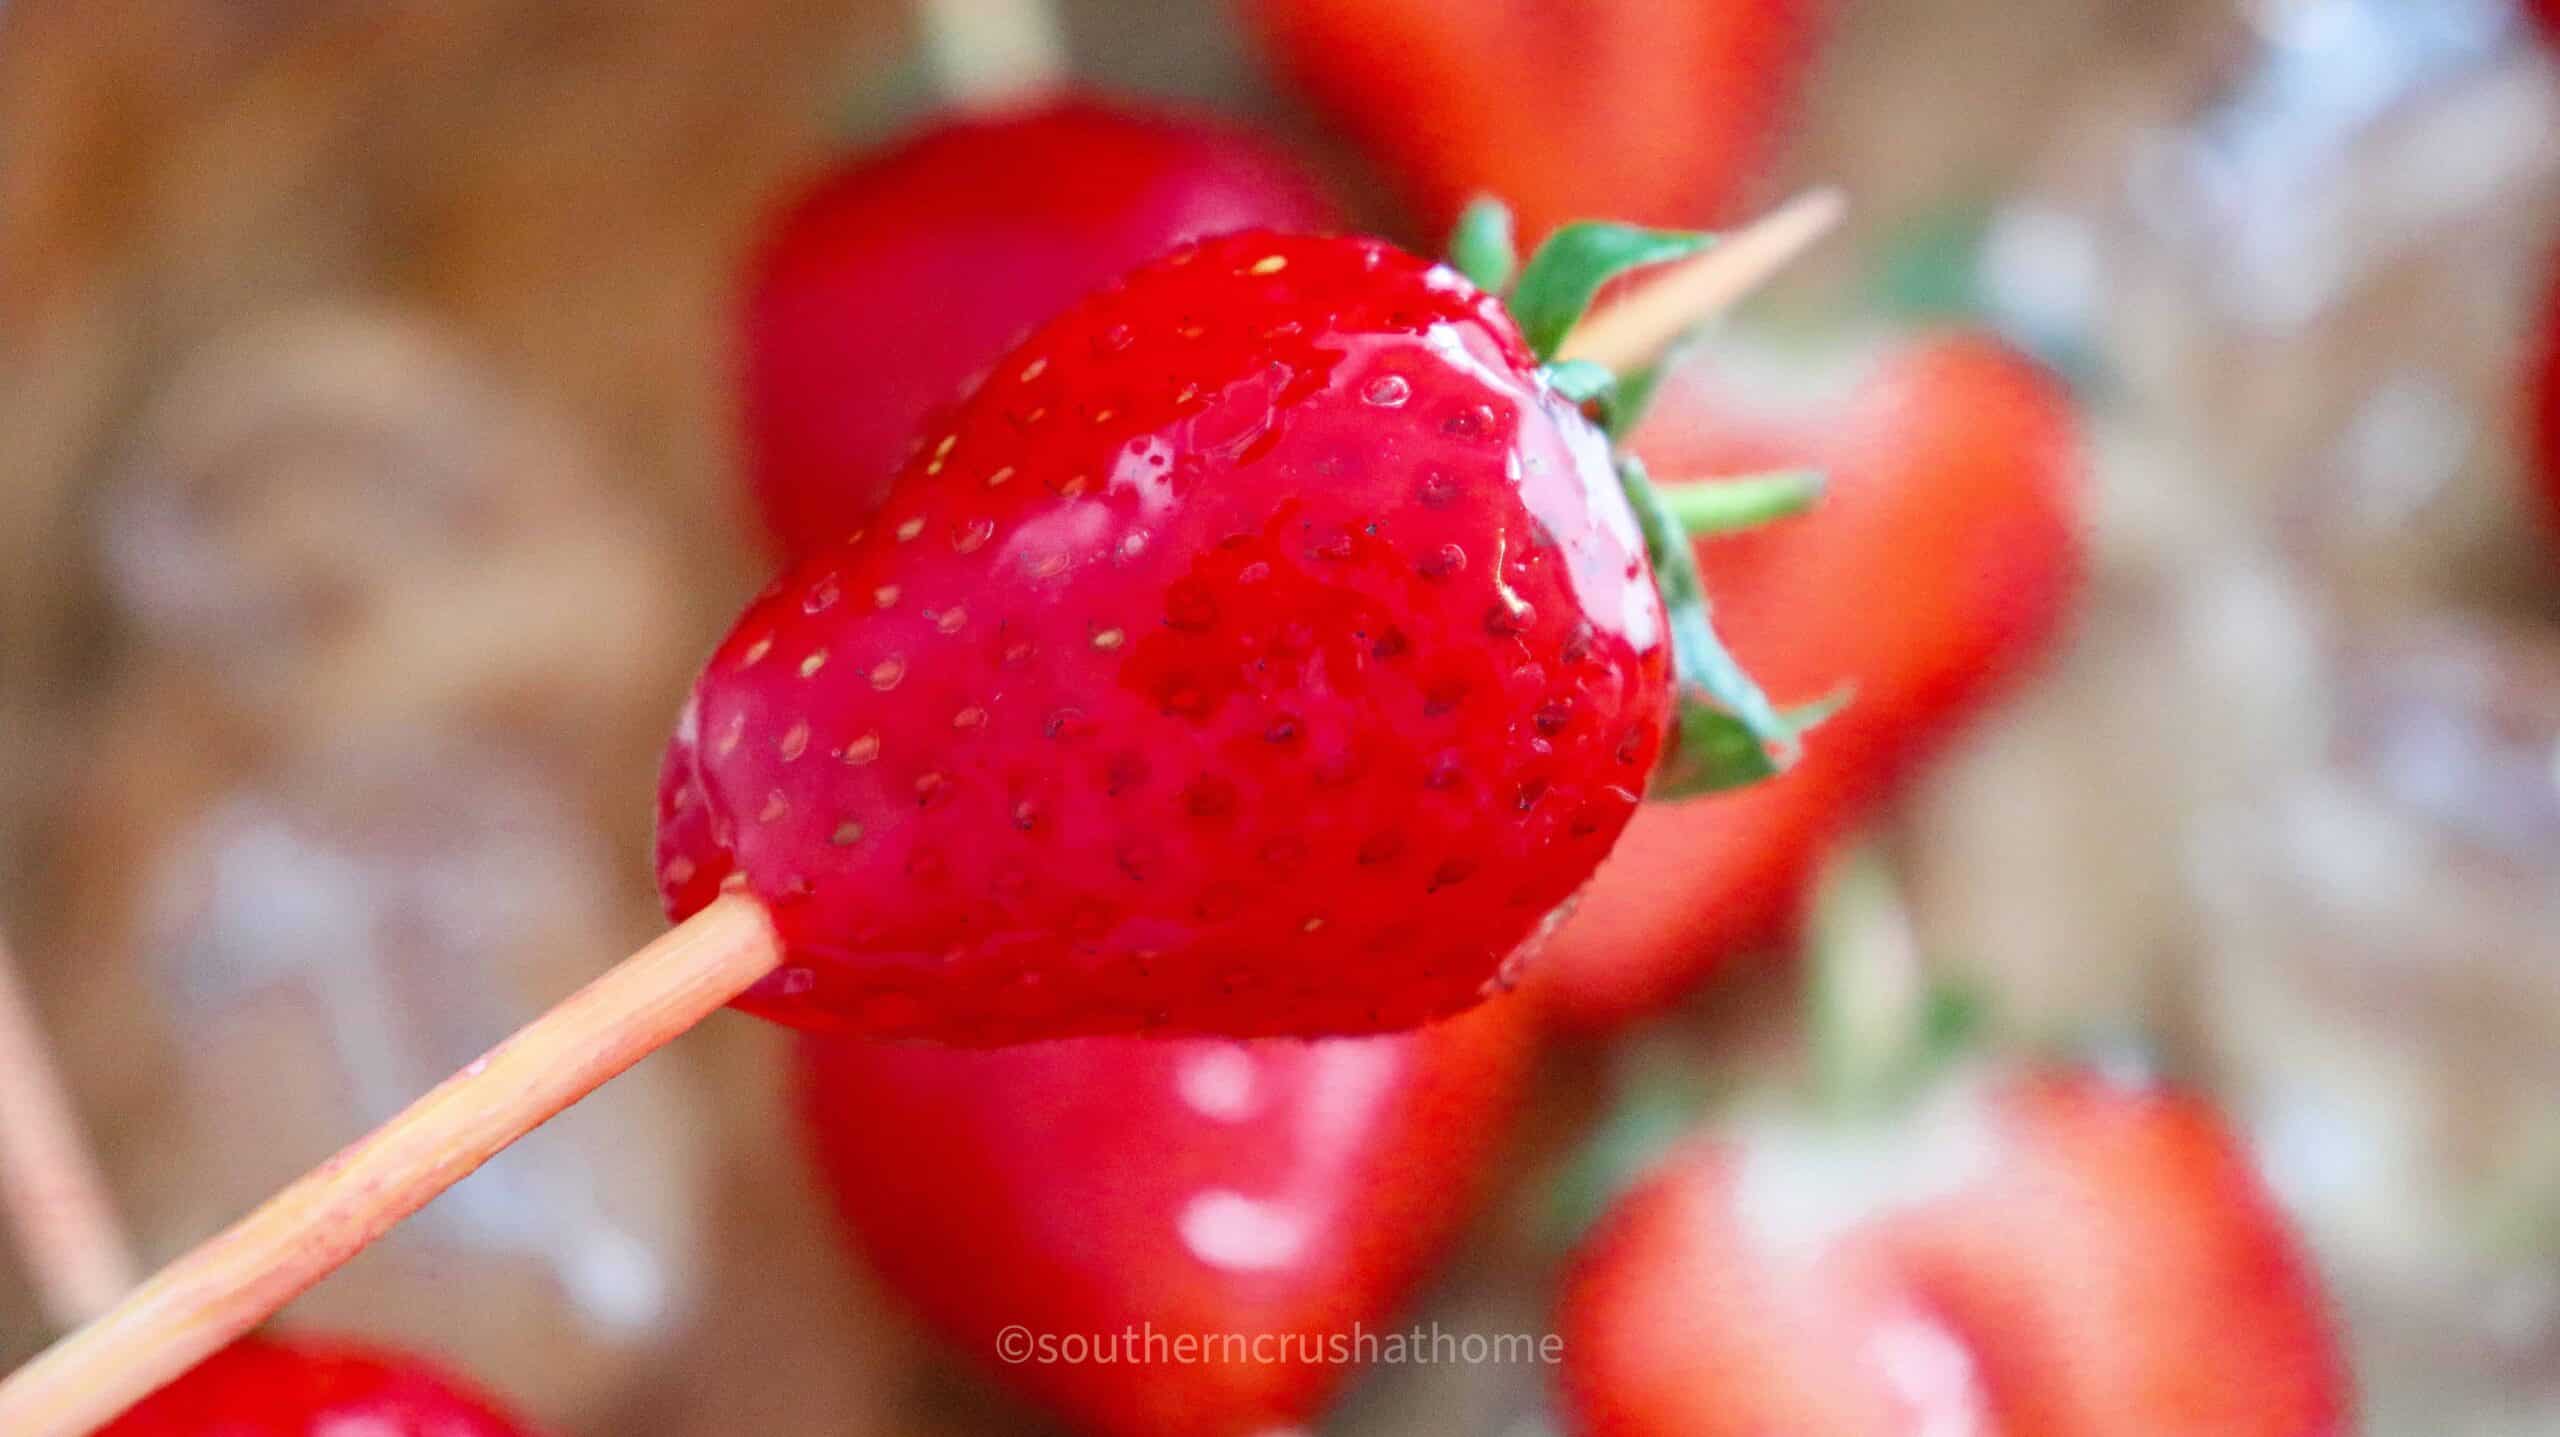 final strawberry up close